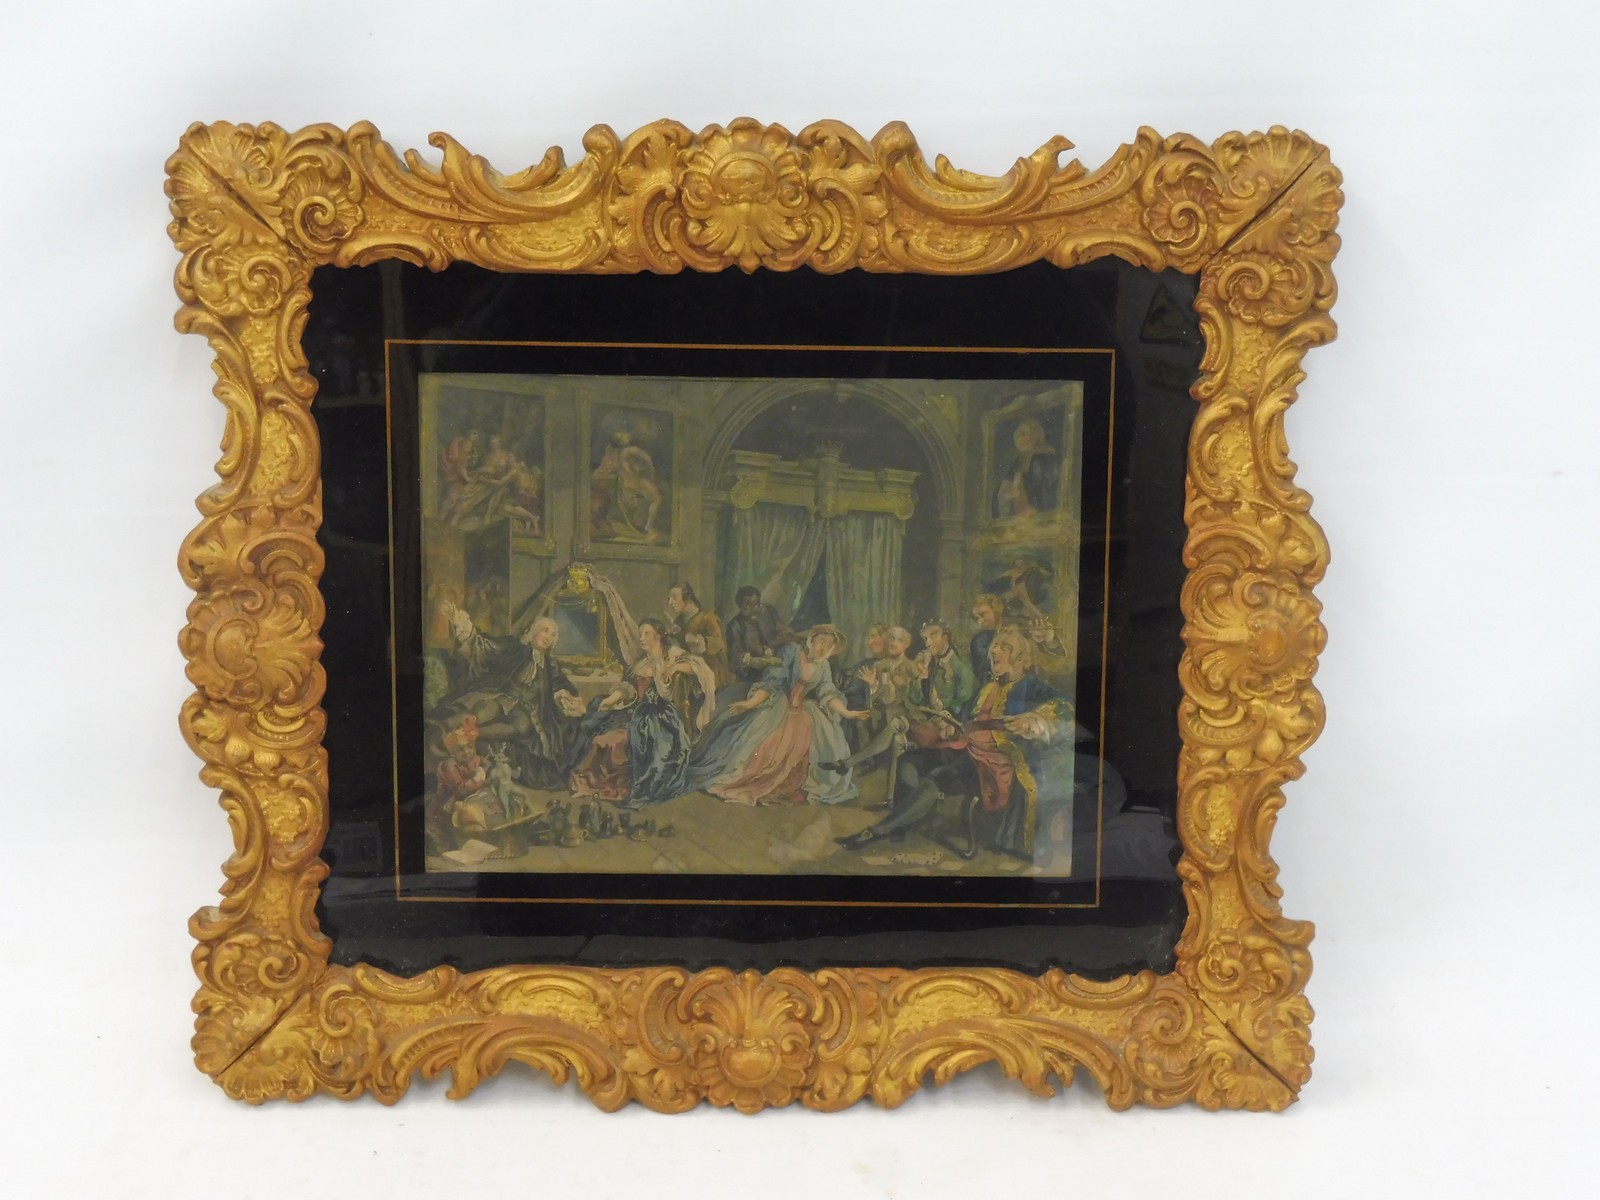 A gilt framed interior scene print set within a glass mount, 16 x 14".